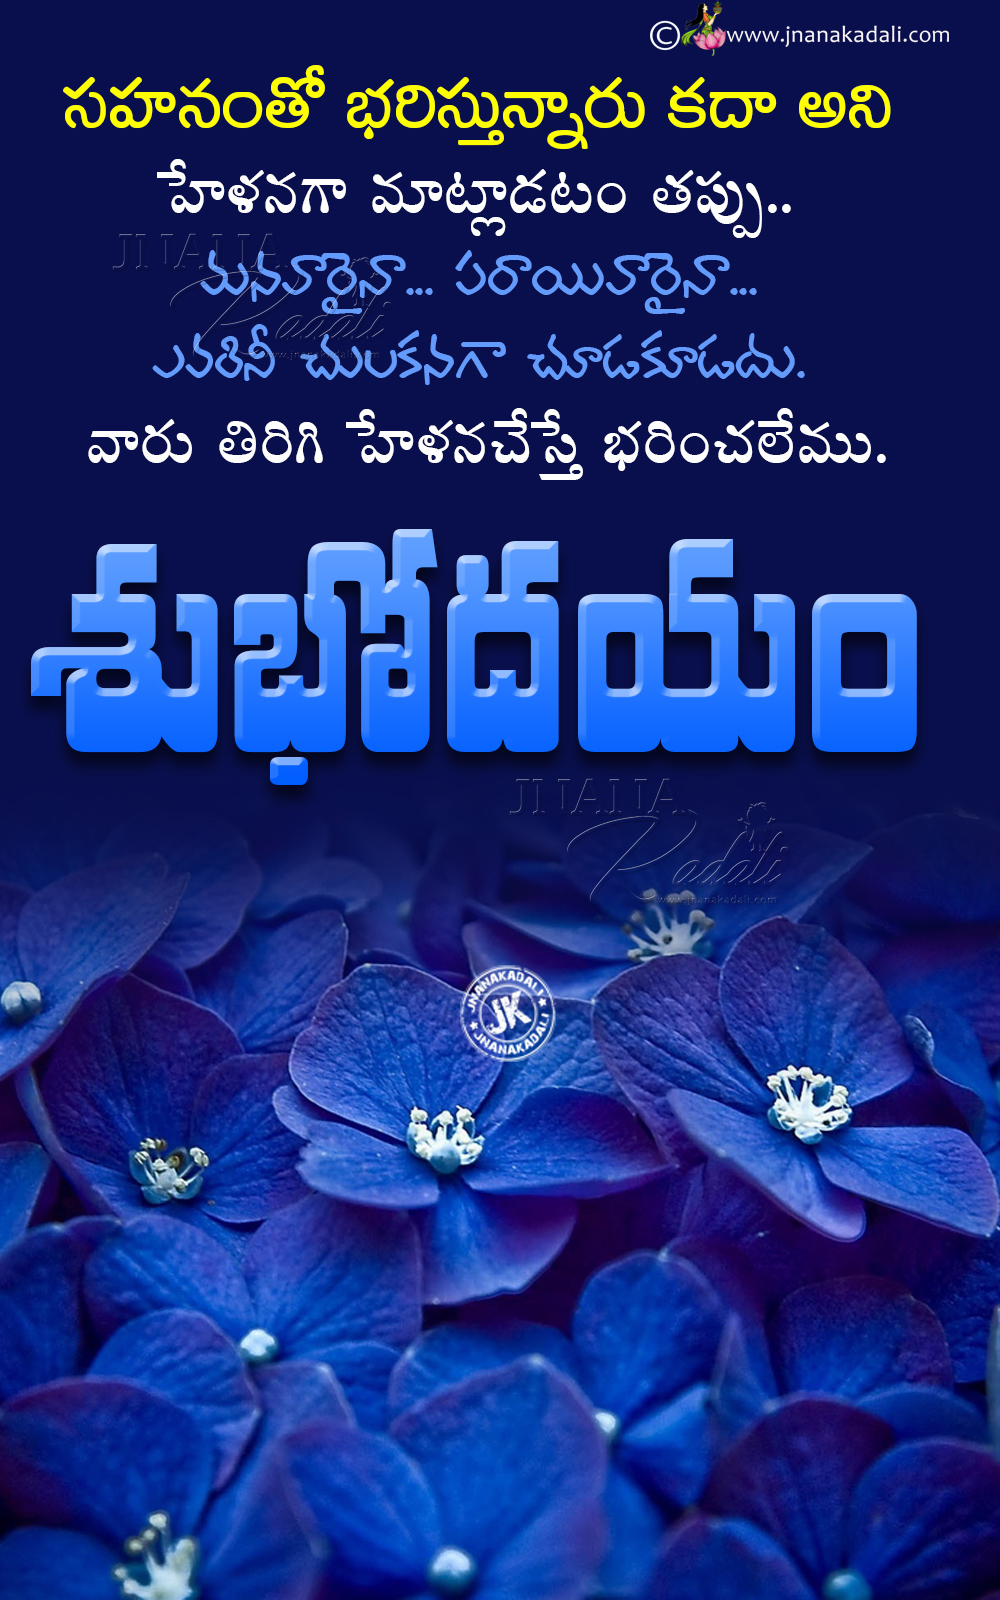 Good Morning Telugu Quotes-Relationship Words in Telugu | JNANA ...